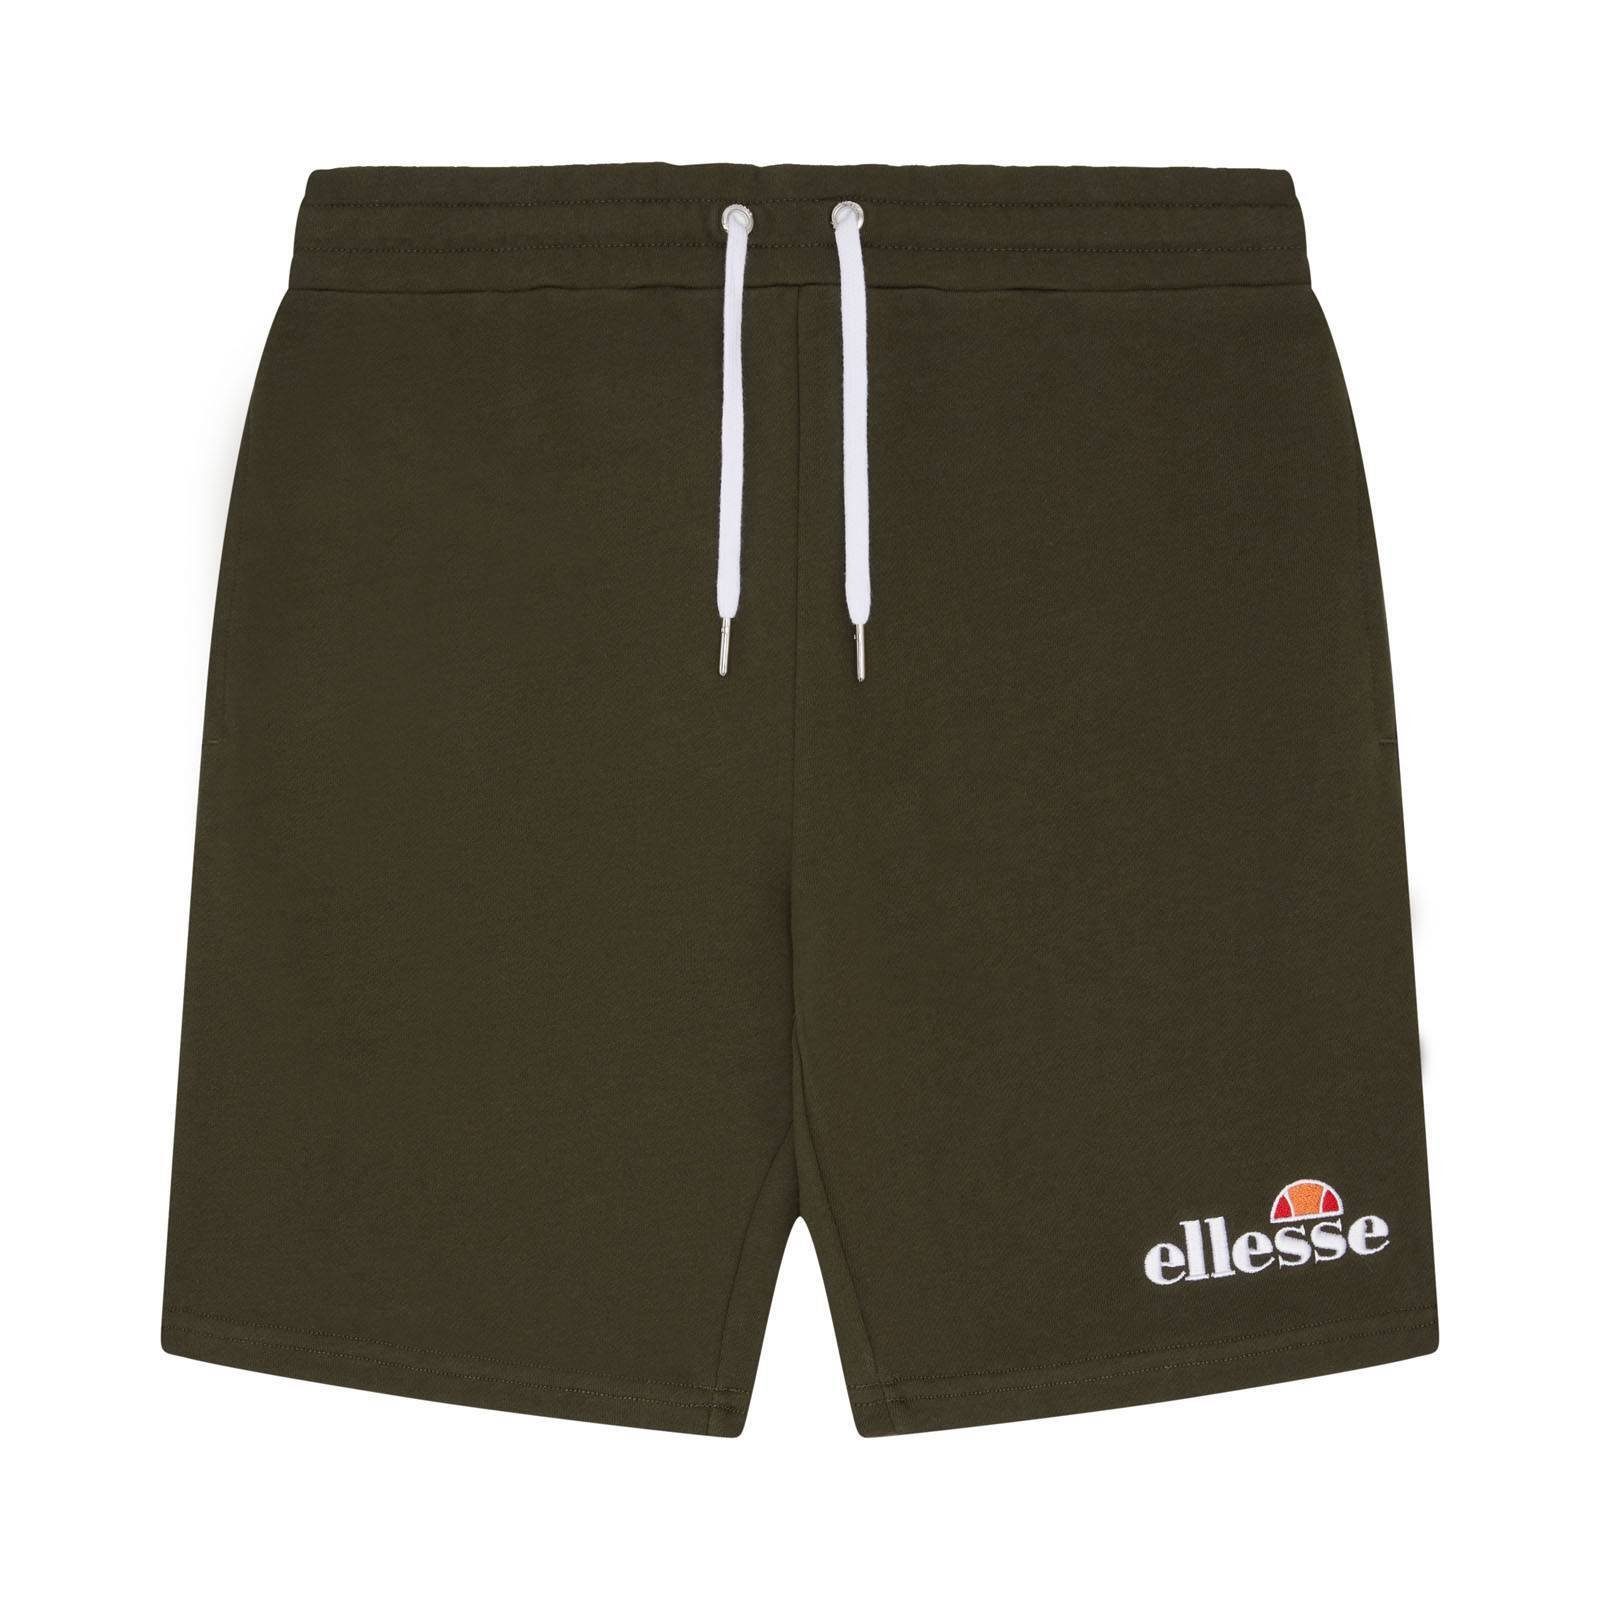 Ellesse Sweatshorts Herren Shorts SILVAN - Loungewear, Jog-Pants Grün